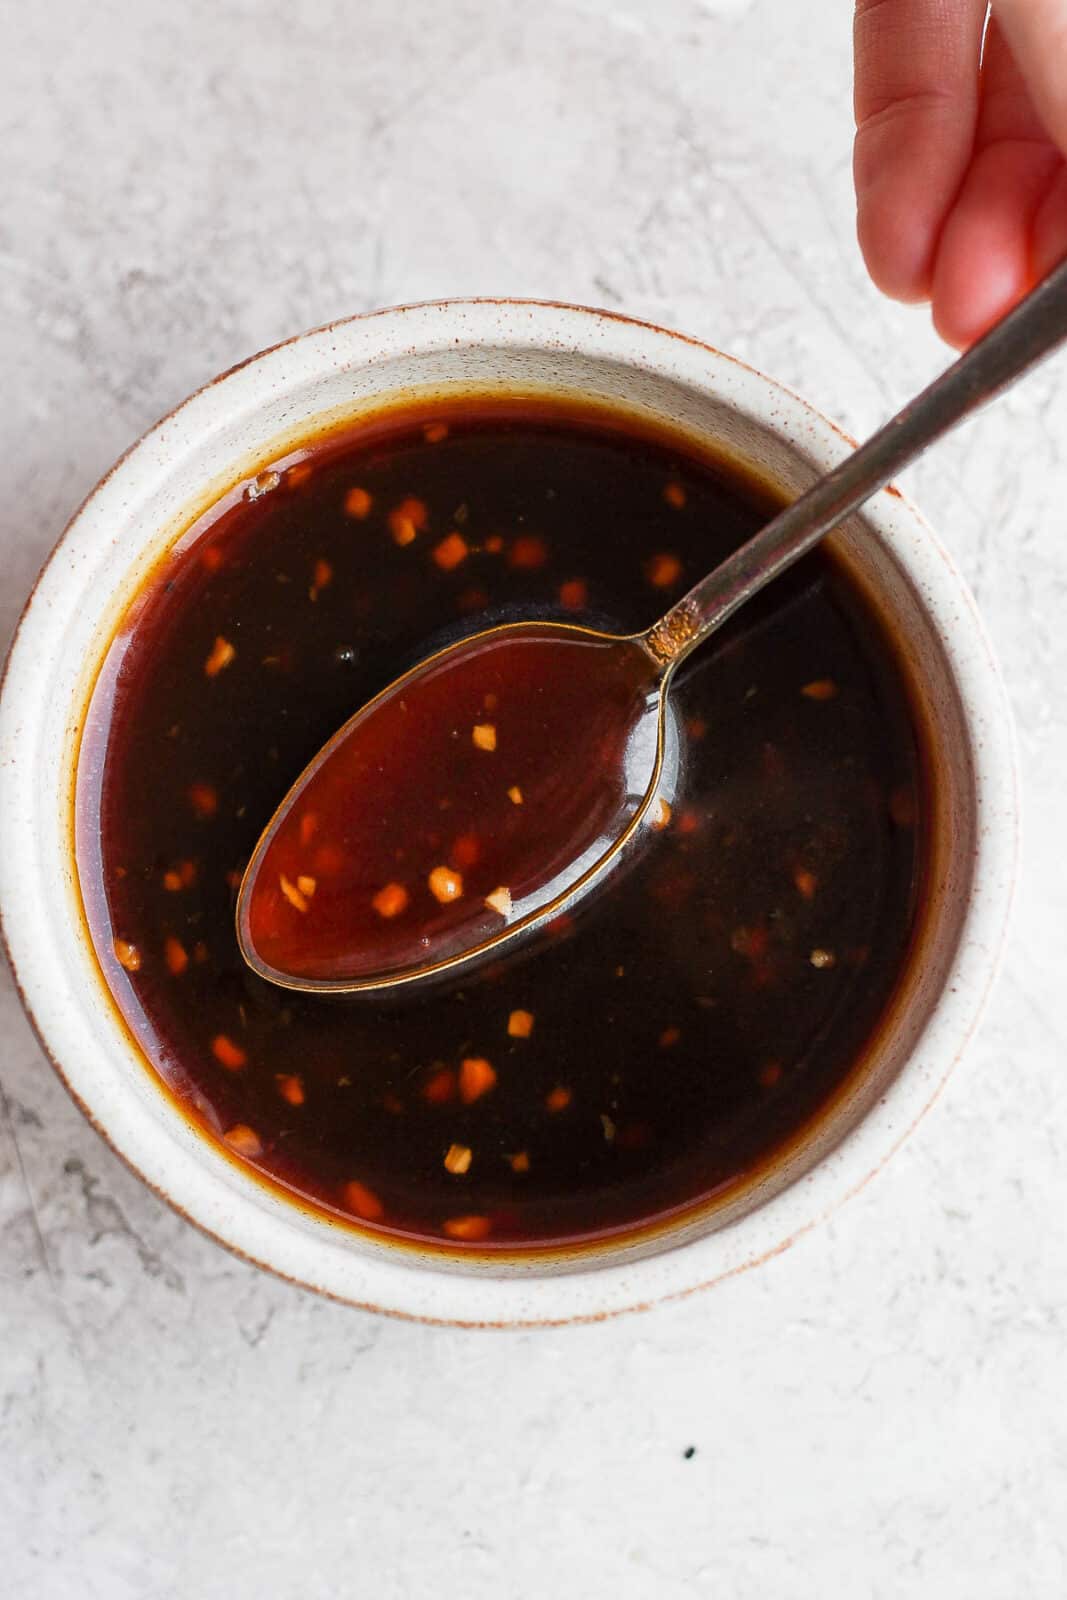 Homemade teriyaki sauce in a bowl with a spoon.